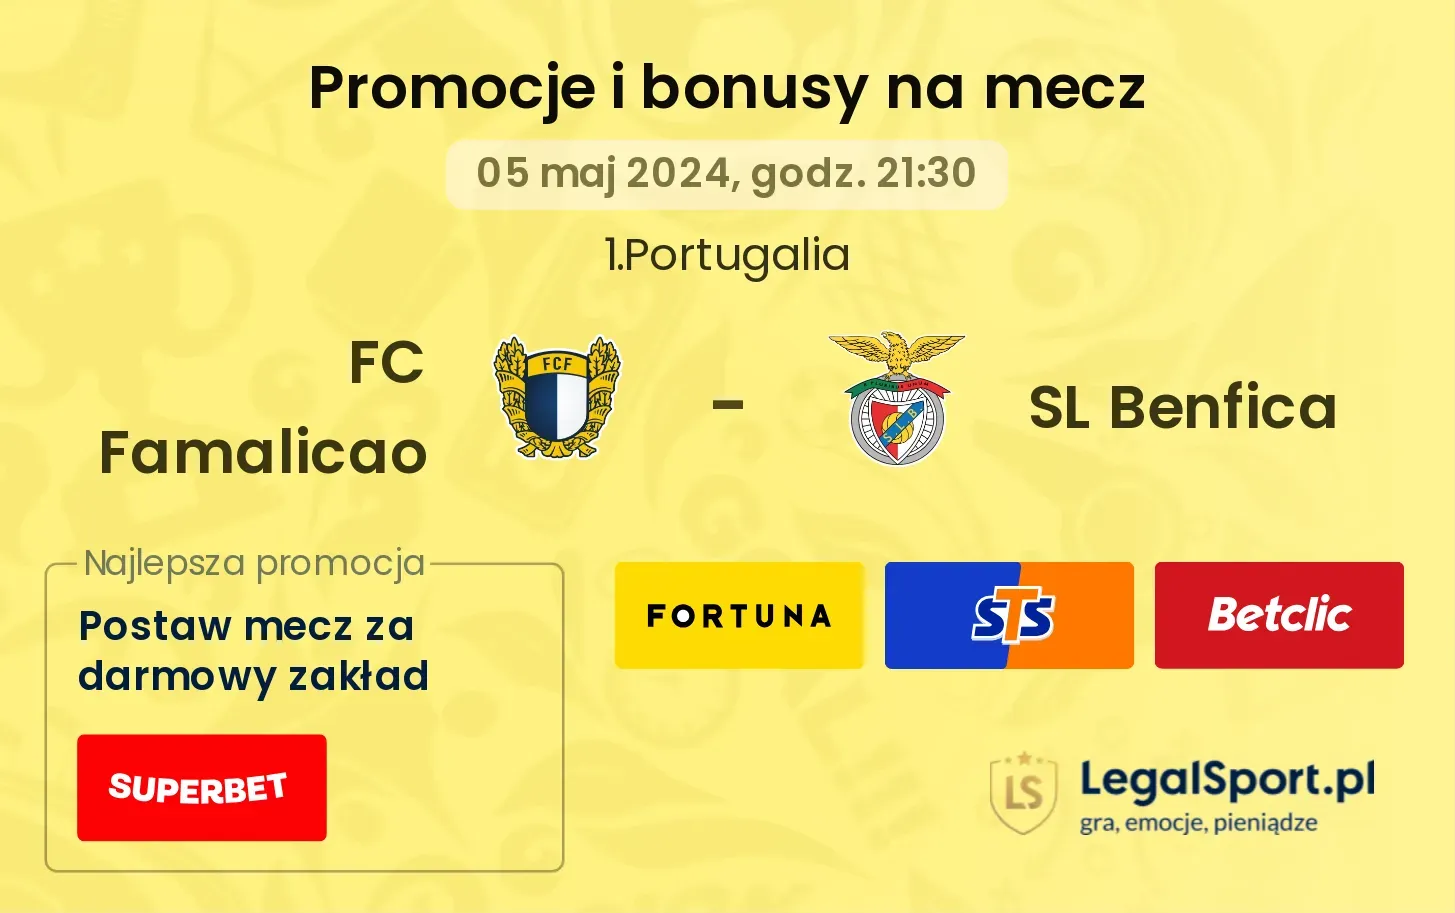 FC Famalicao - SL Benfica promocje bonusy na mecz